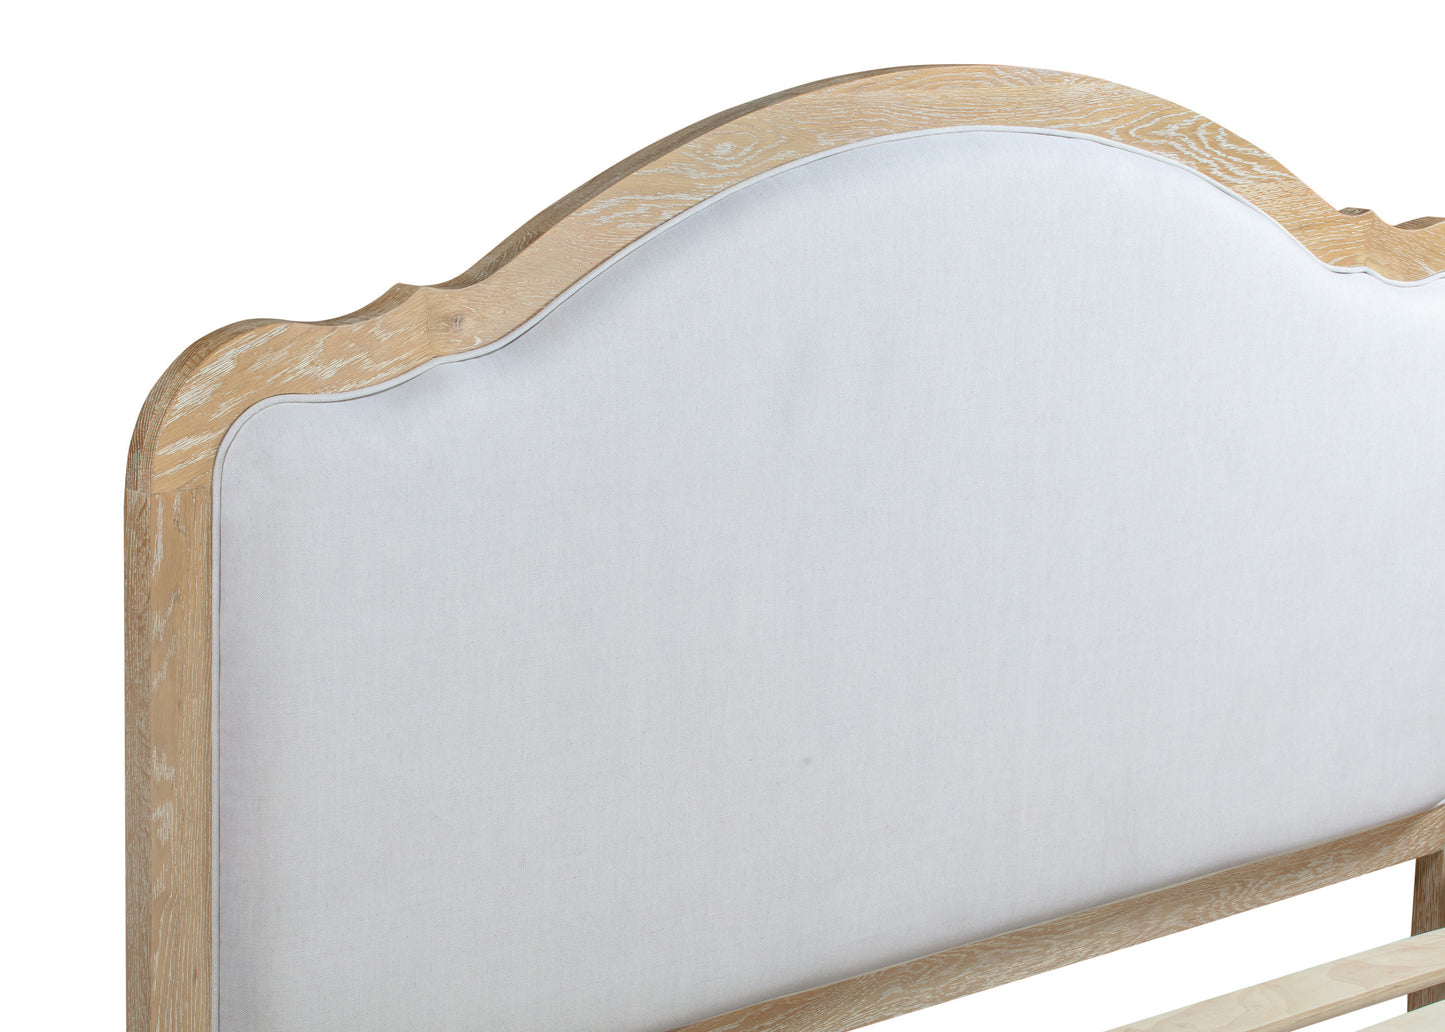 SIENA King European Oak & Upholstered Bed